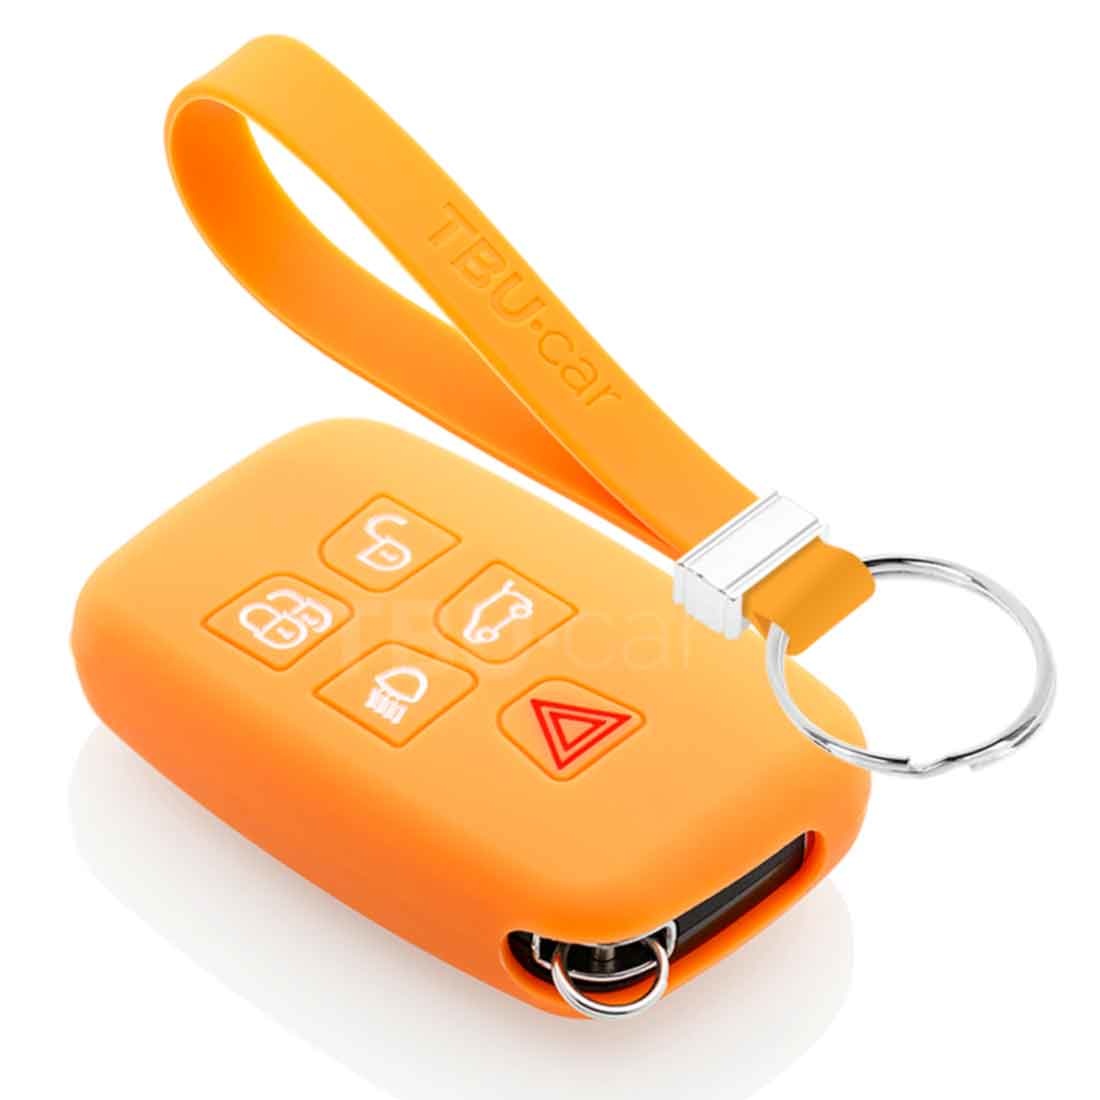 TBU car TBU car Autoschlüssel Hülle kompatibel mit Land Rover 5 Tasten (Keyless Entry) - Schutzhülle aus Silikon - Auto Schlüsselhülle Cover in Orange